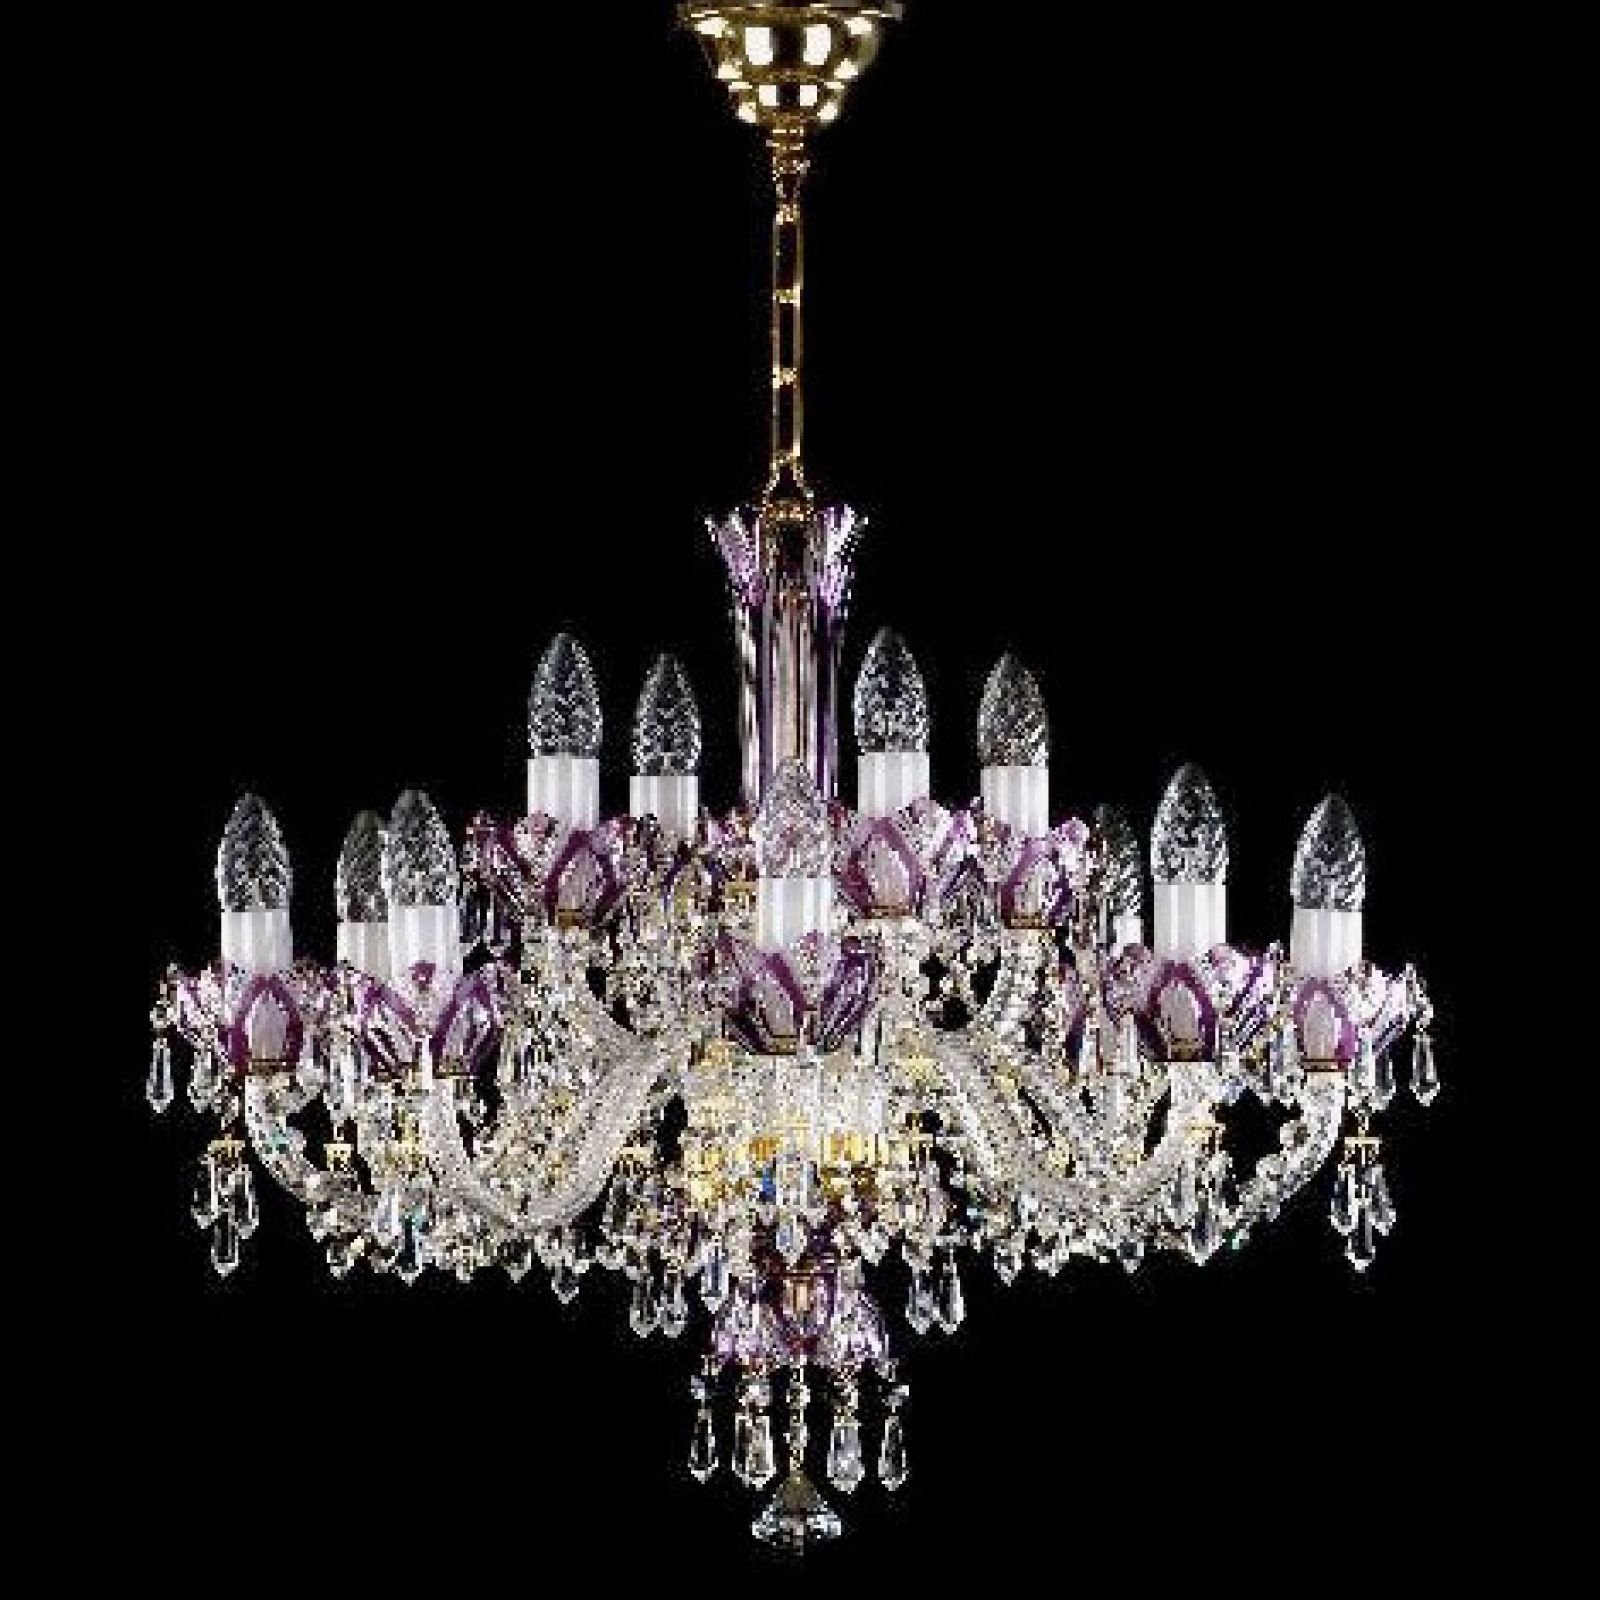 Stunning large coloured chandelier - nickel